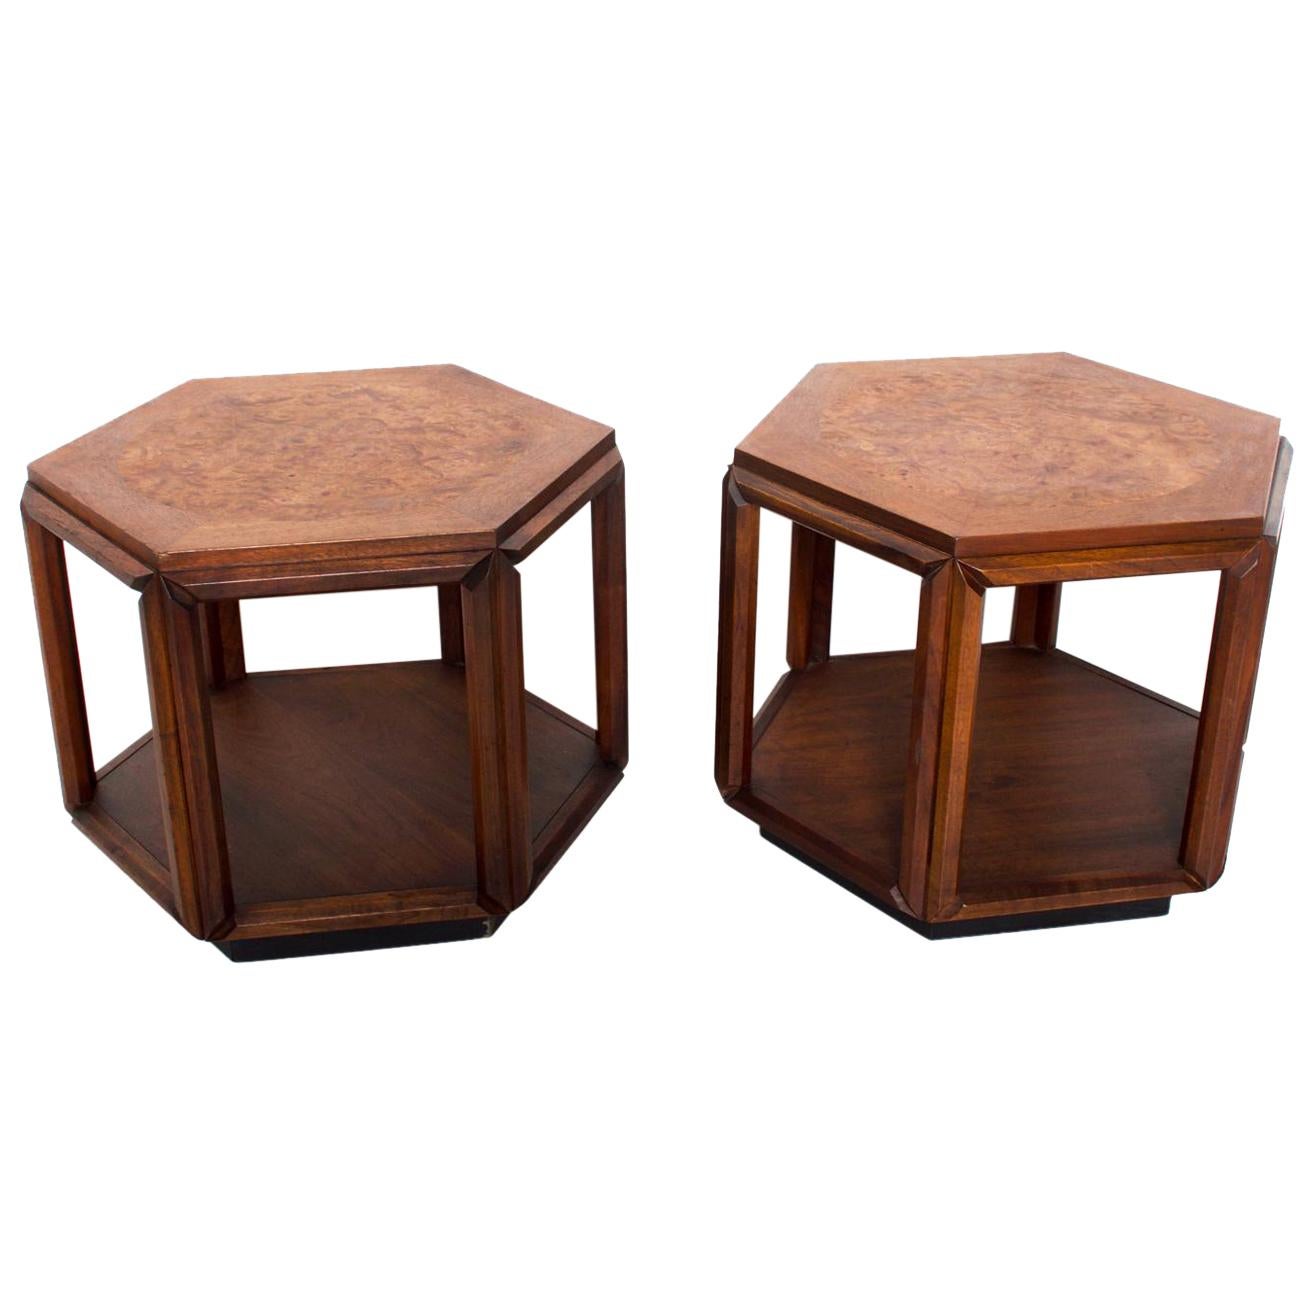 Hexagonal Side Tables in Walnut with Burlwood Top by John Keal for Brown Saltman